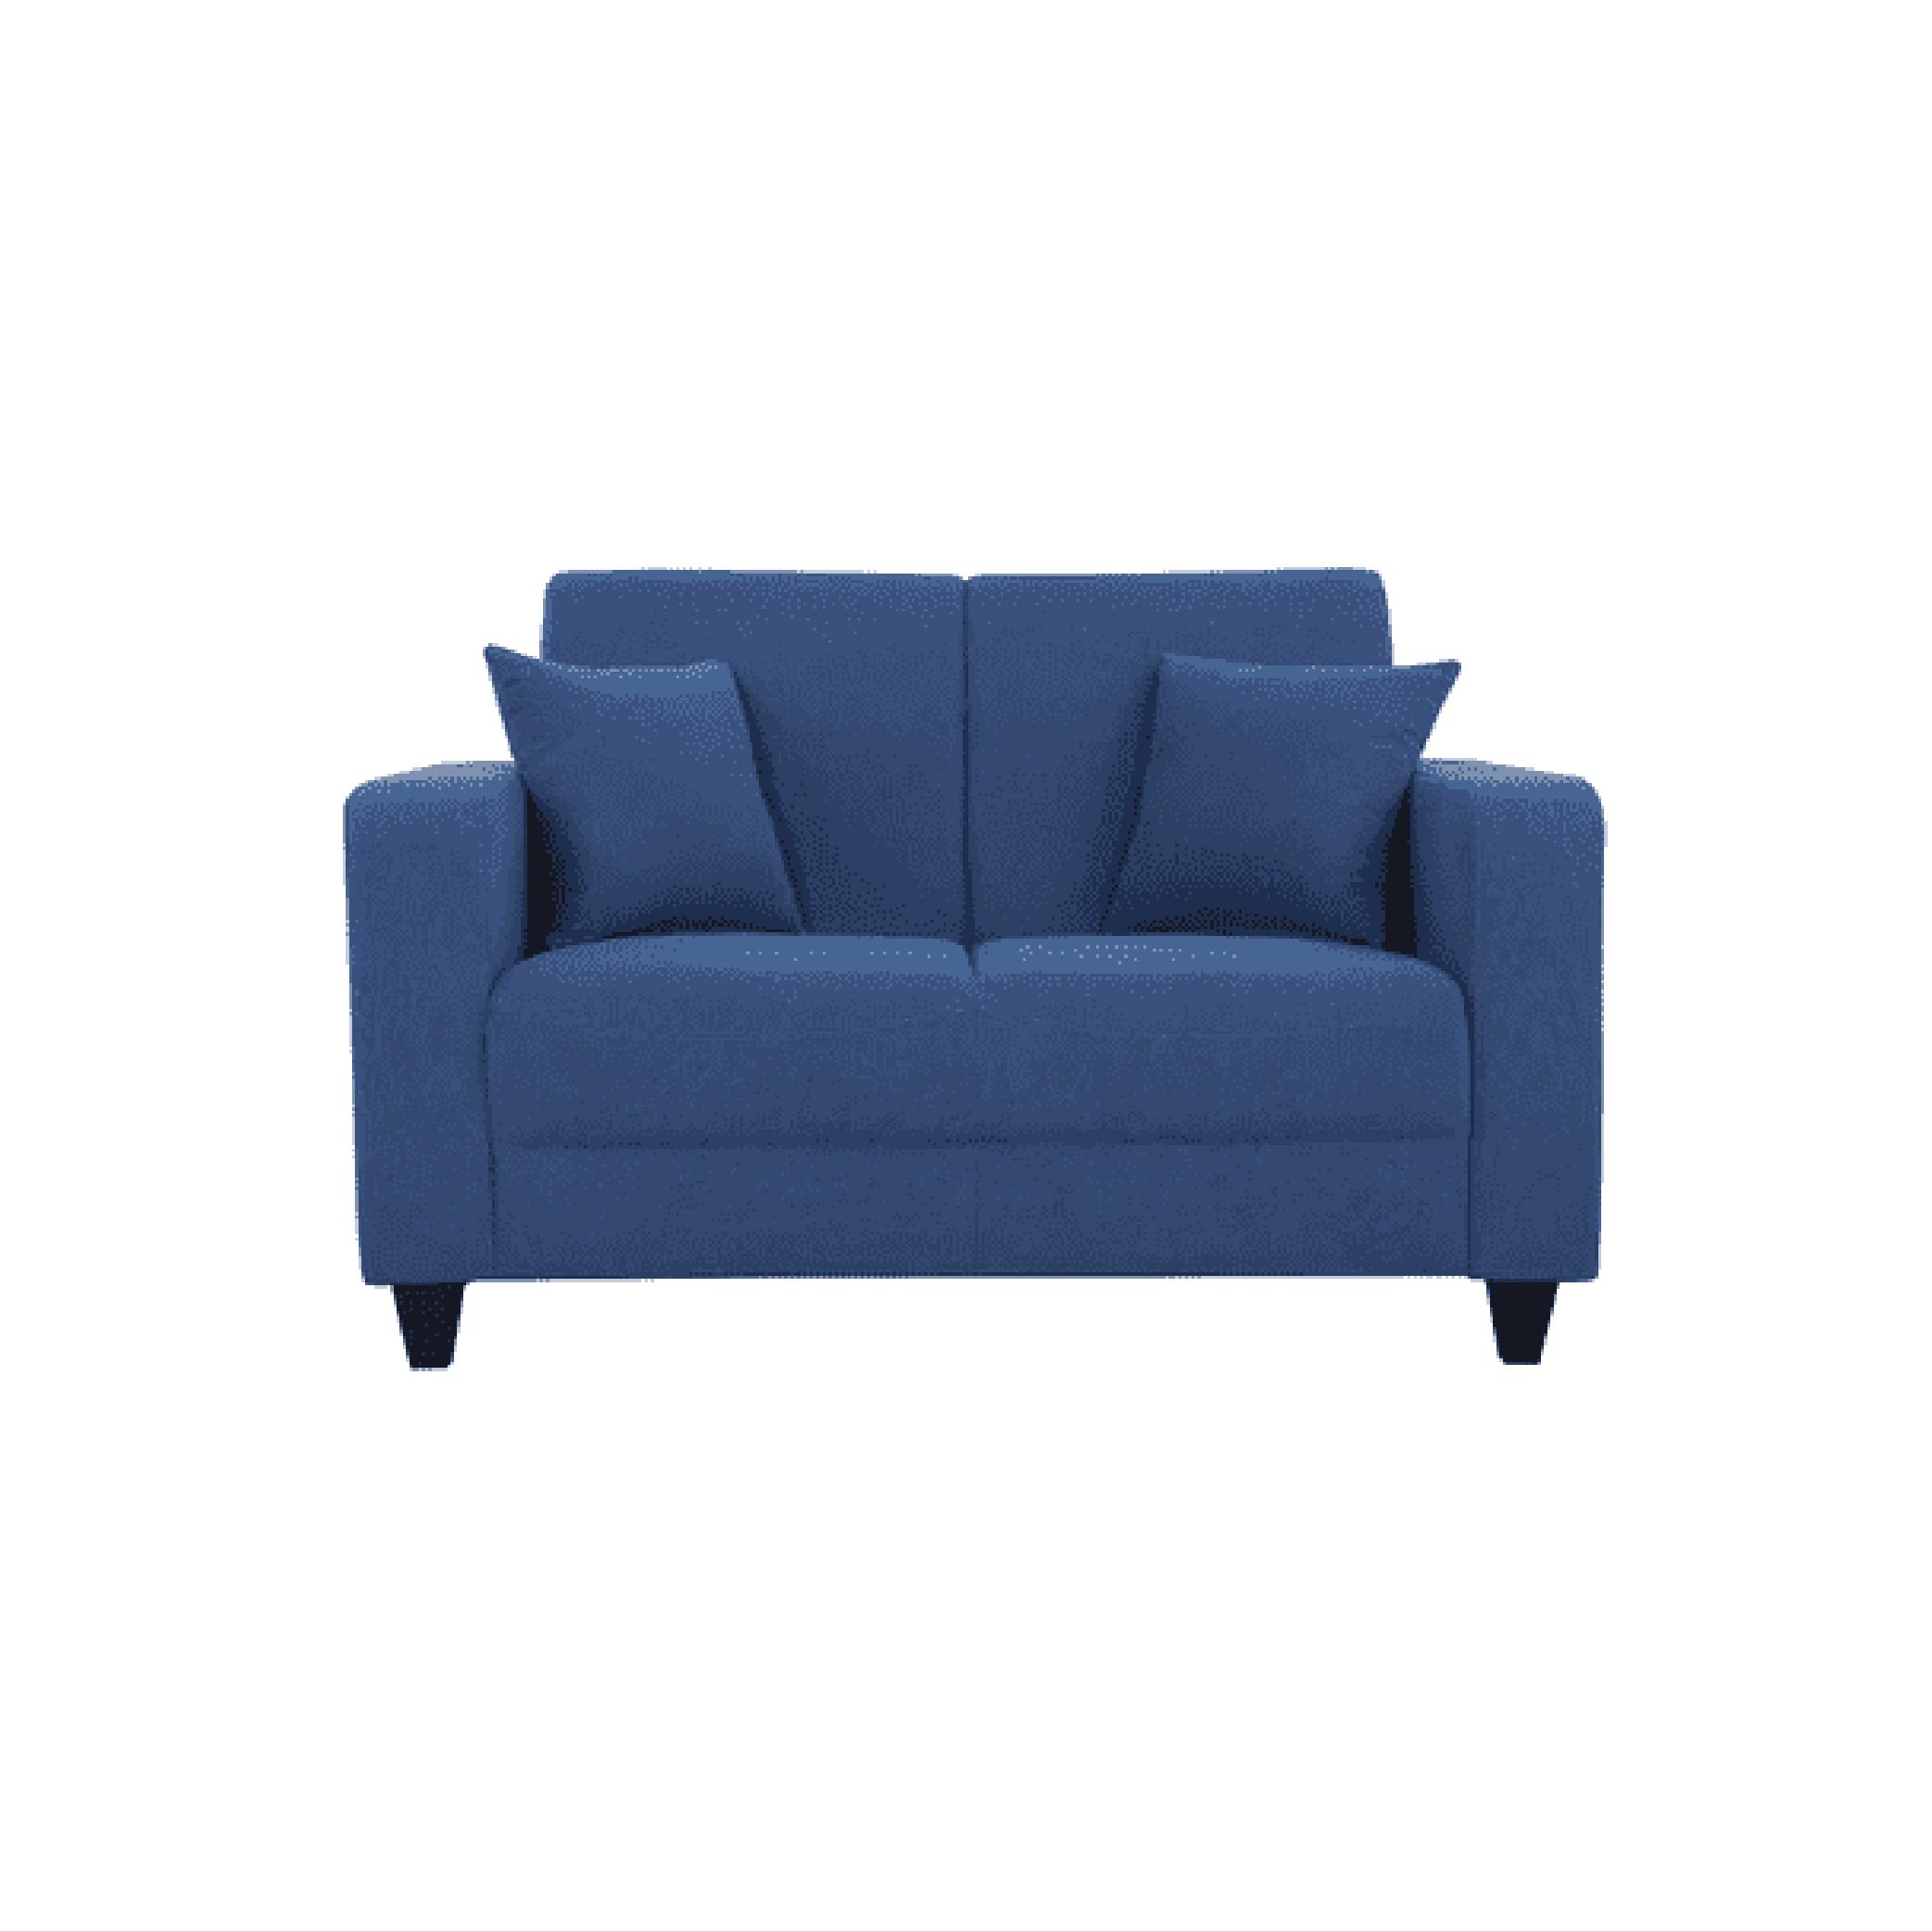 Naples Two Seater Sofa in Denim Blue Colour